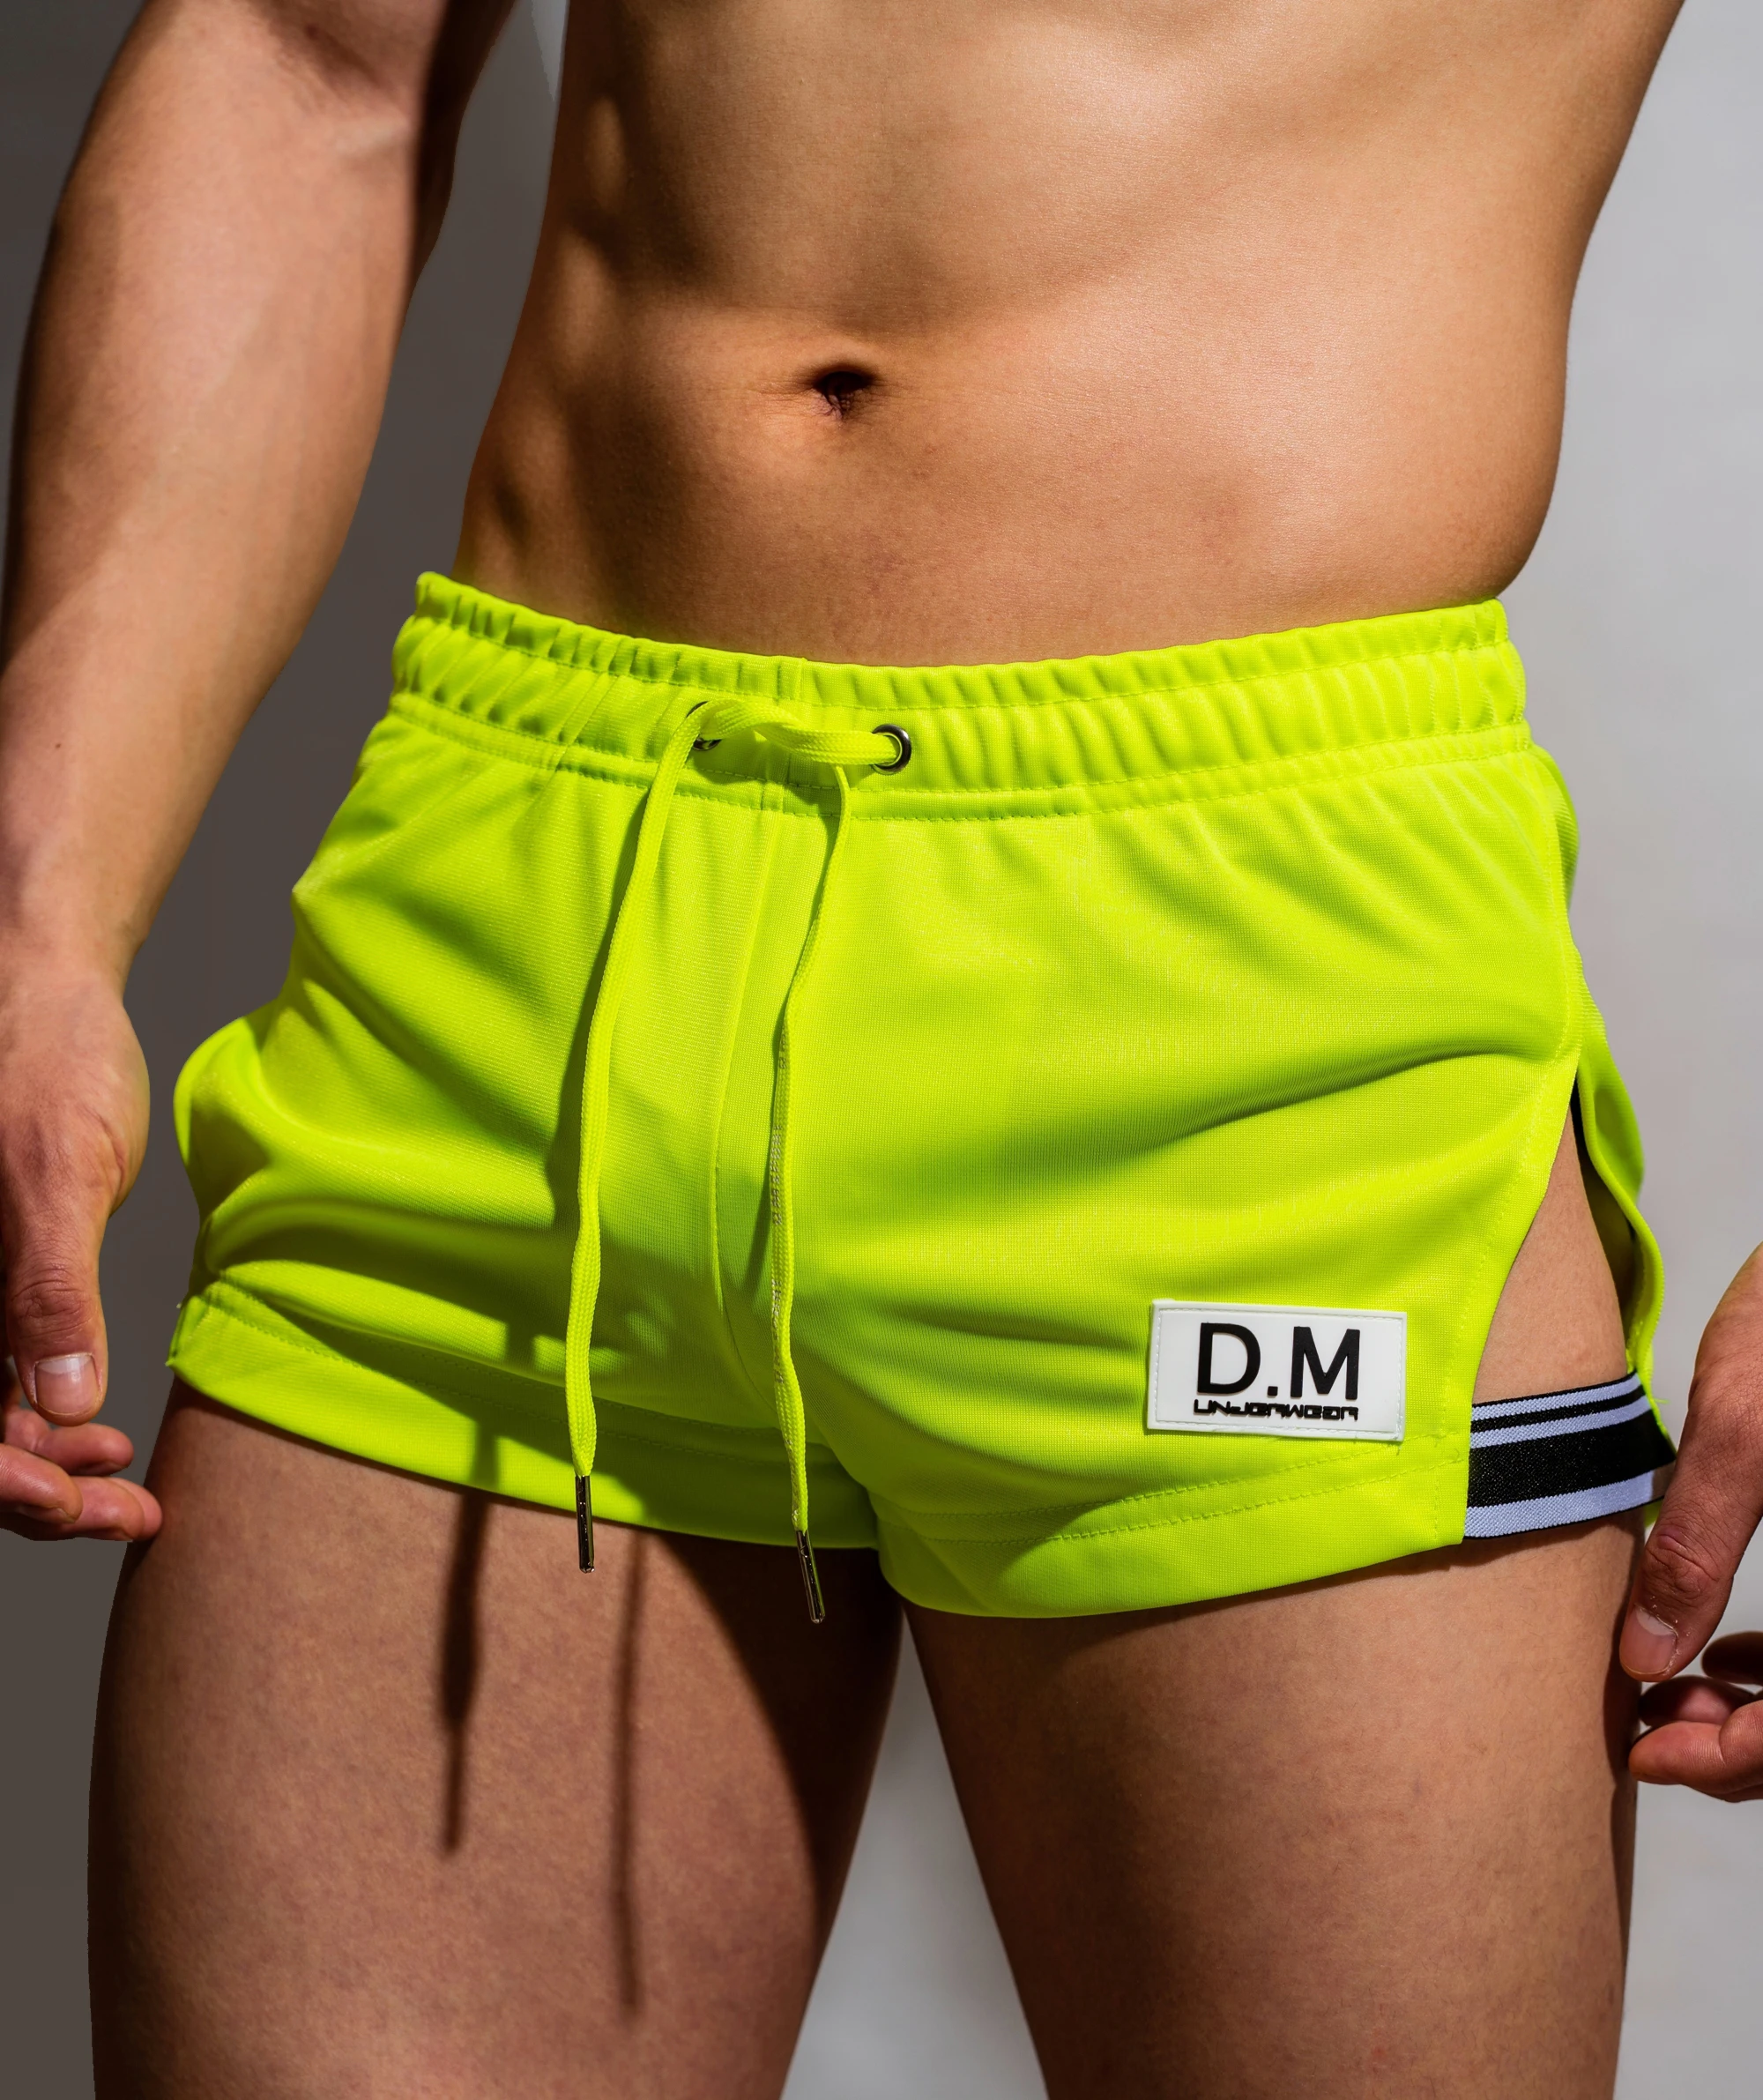 Fashion Fun Boxer Shorts Underpants Sexy Man Fashion Brief Soft Men's Panties U Convex Pouch Shorts Sexy Male Underwear